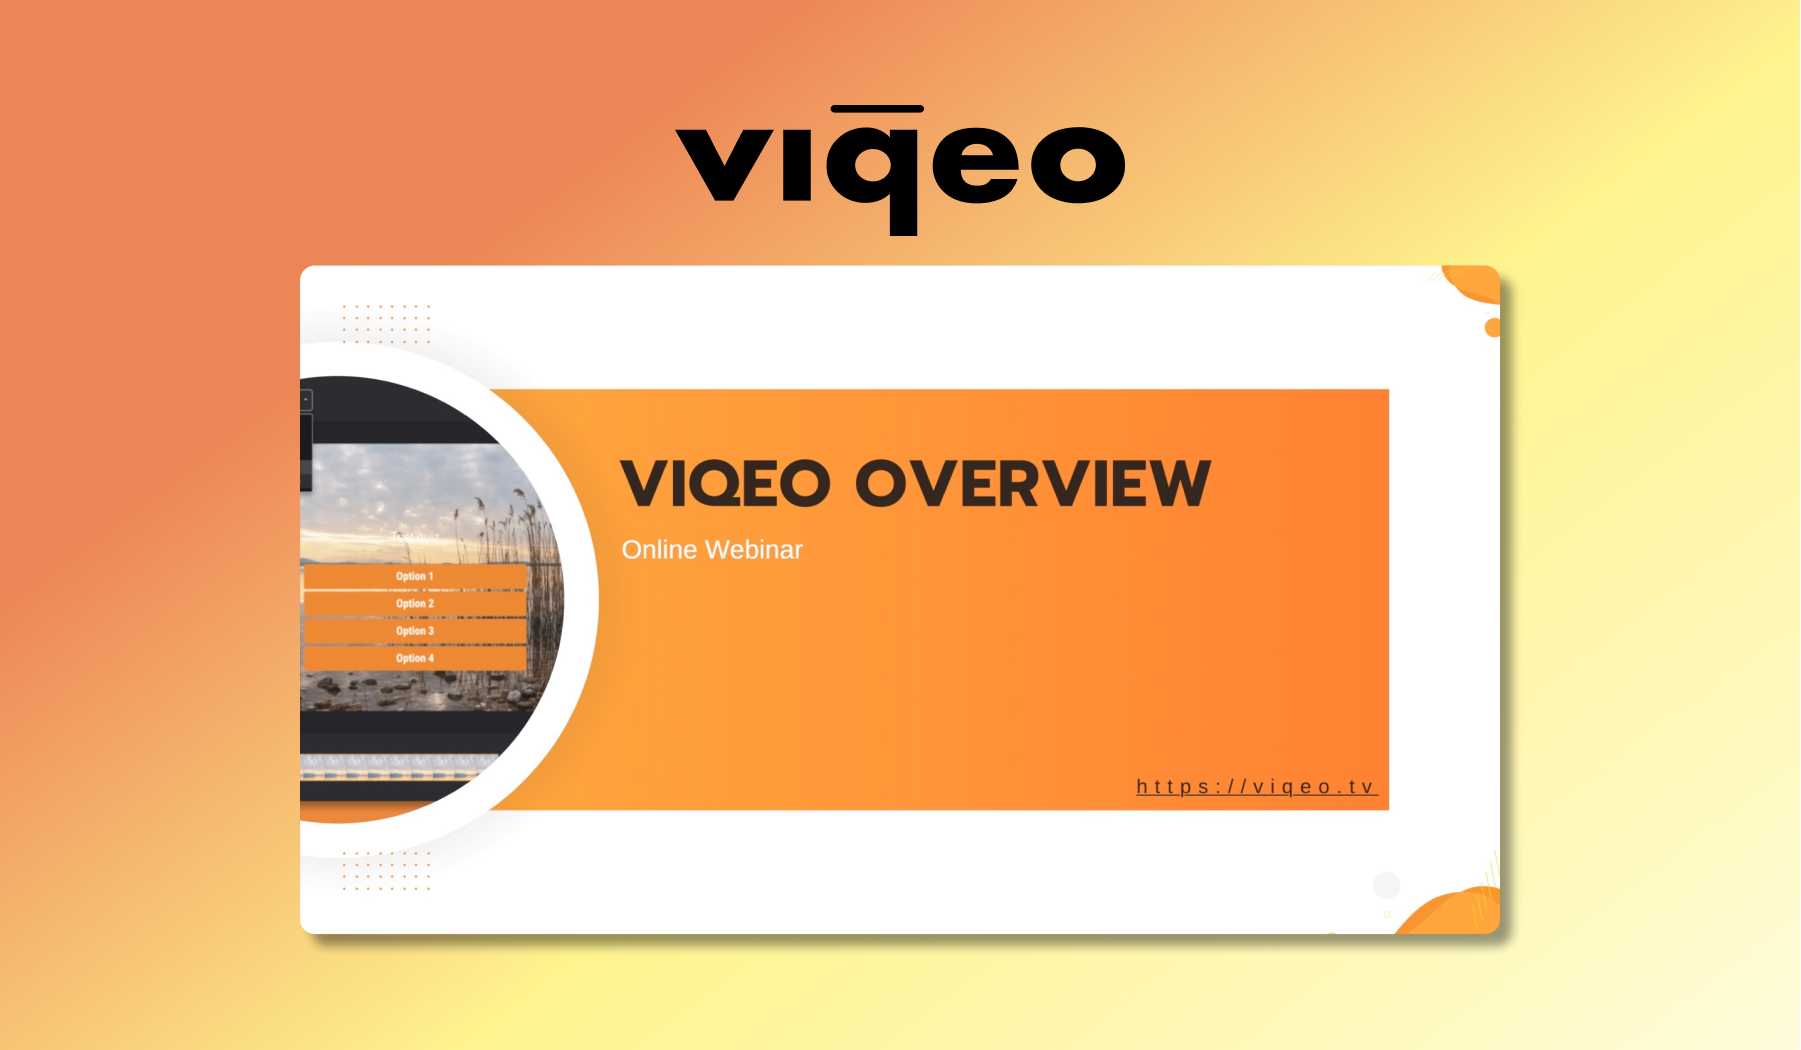 Viqeo Overview webinar